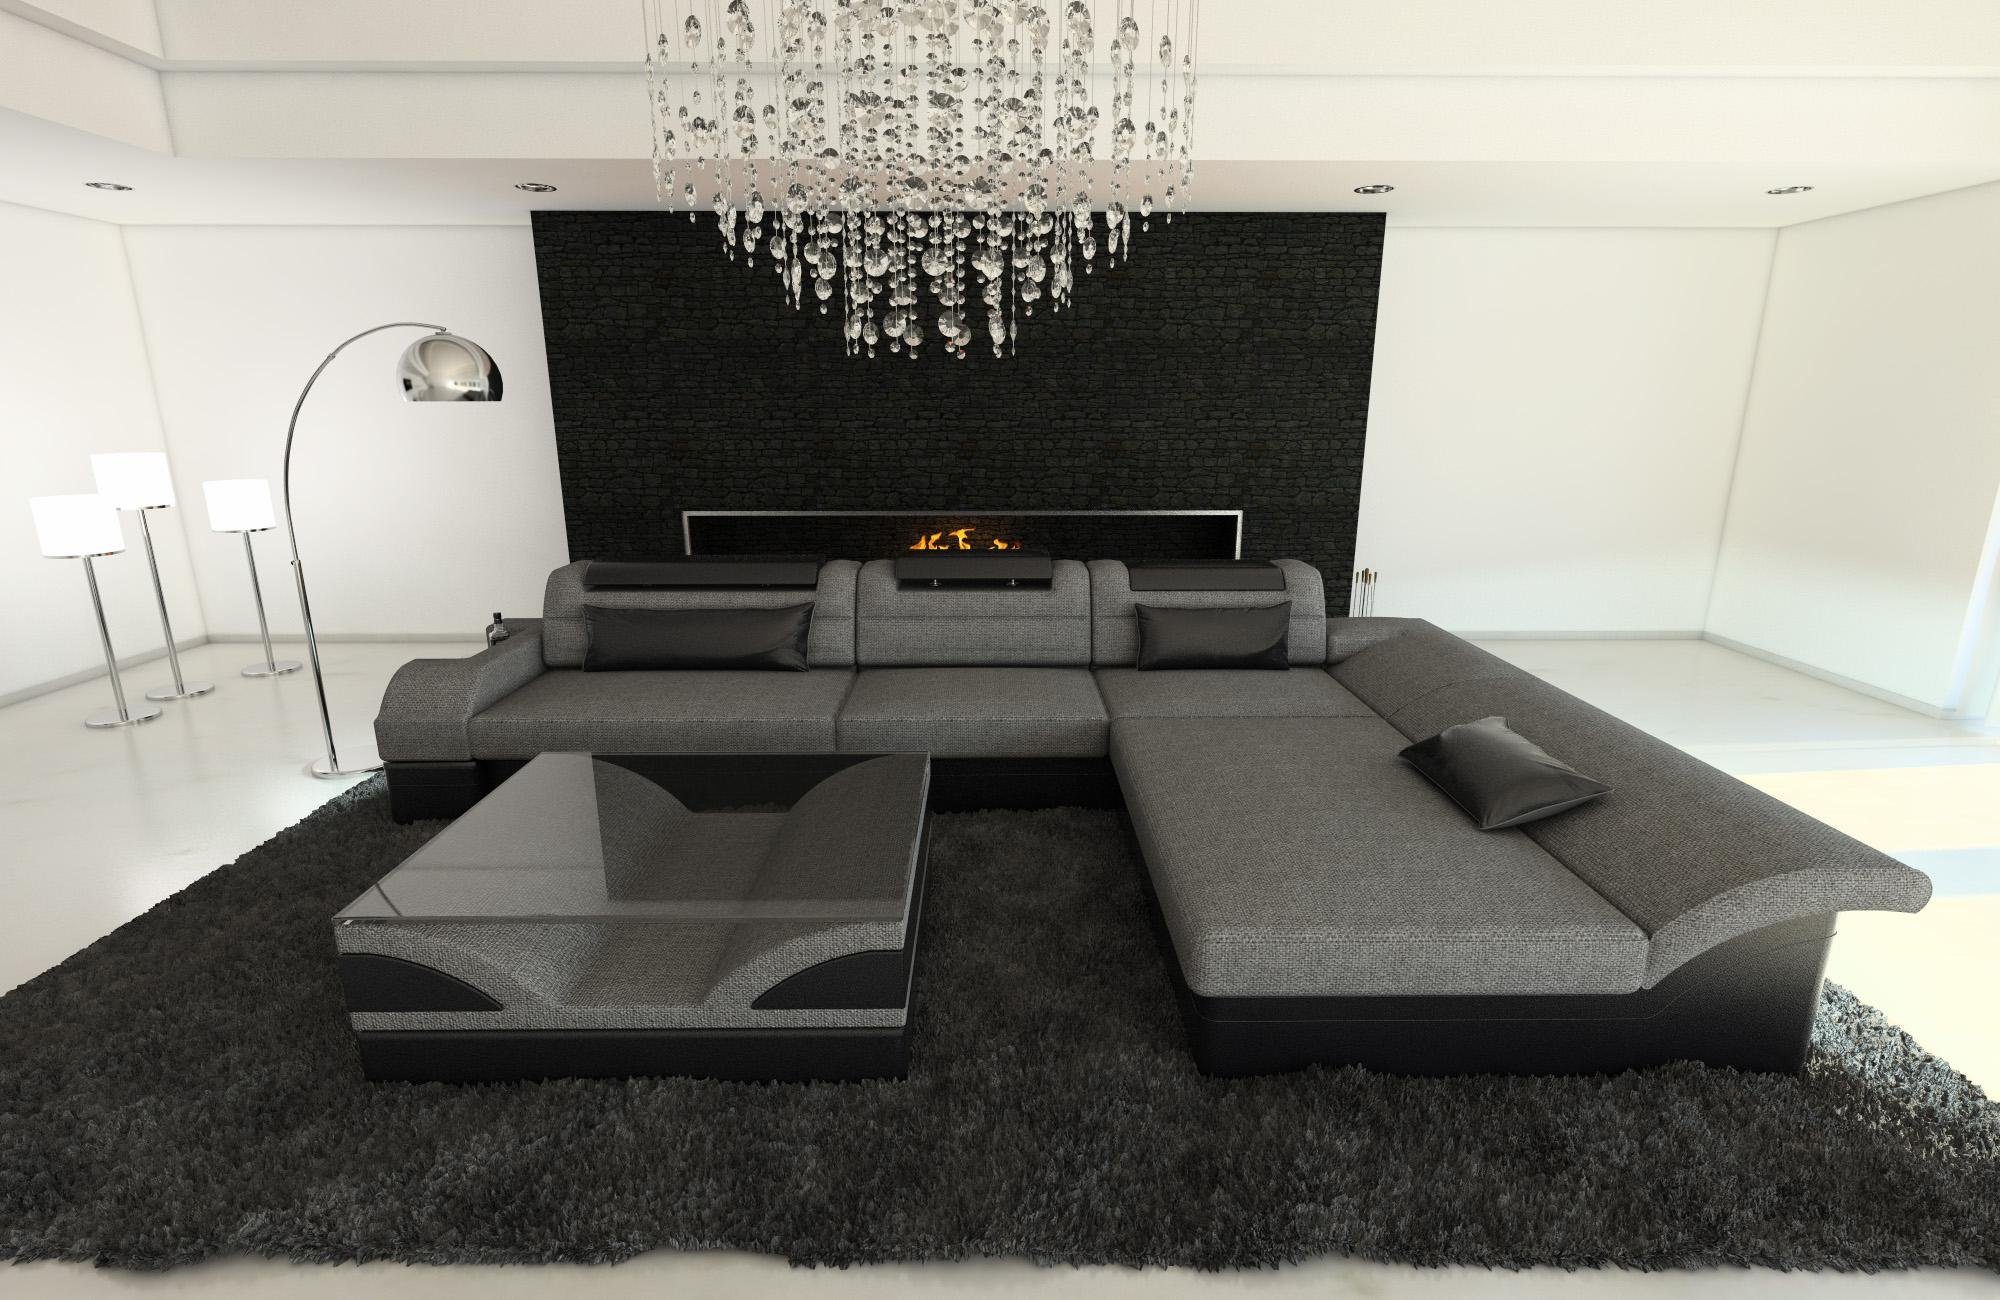 Monza H5 Designersofa Couch Grau-Schwarz Form, Stoffsofa Stoff Sofa ausziehbare Ecksofa L LED, Bettfunktion, Dreams Polstersofa mit